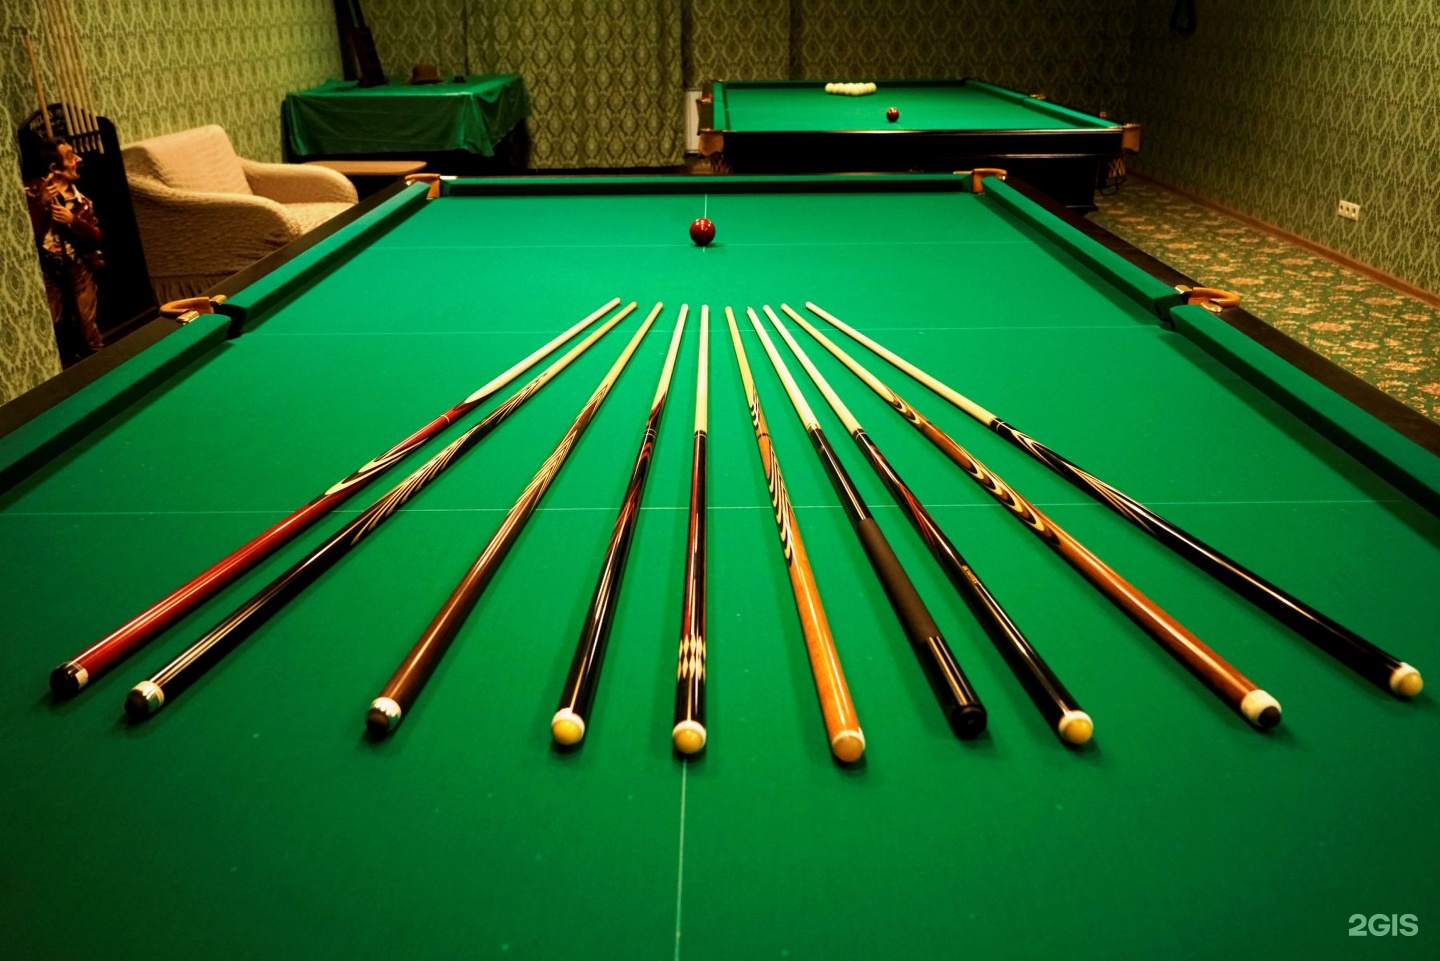 budget billiards